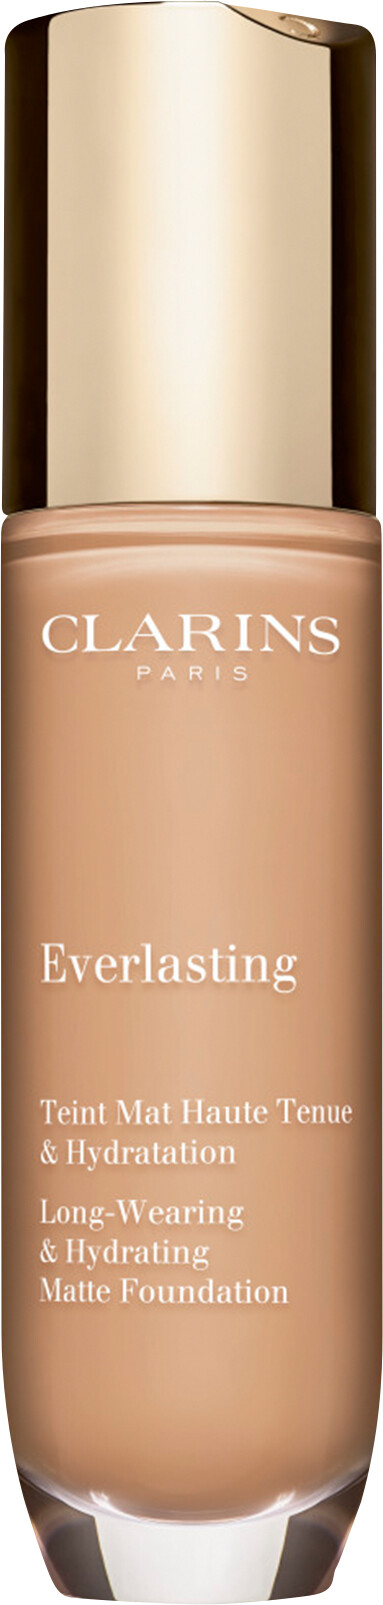 Clarins Everlasting Long-Wearing & Hydrating Matte Foundation 30ml 110N - Honey